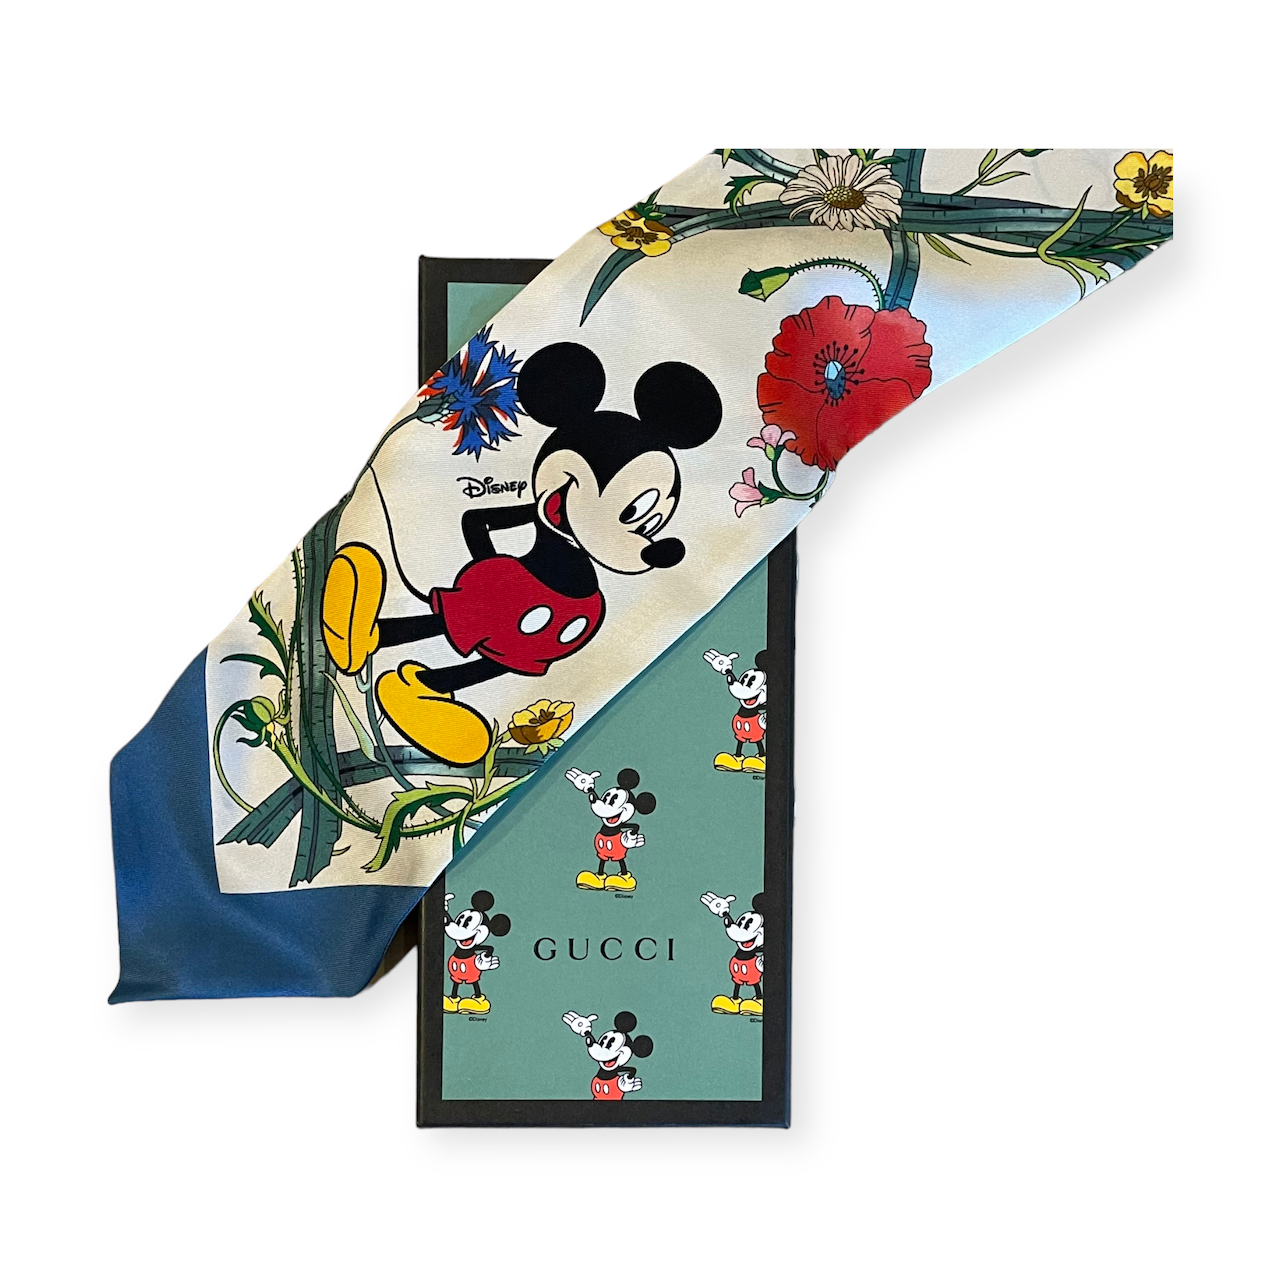 Gucci X Disney Silk Scarf - Mickey Mouse Print (NEW)